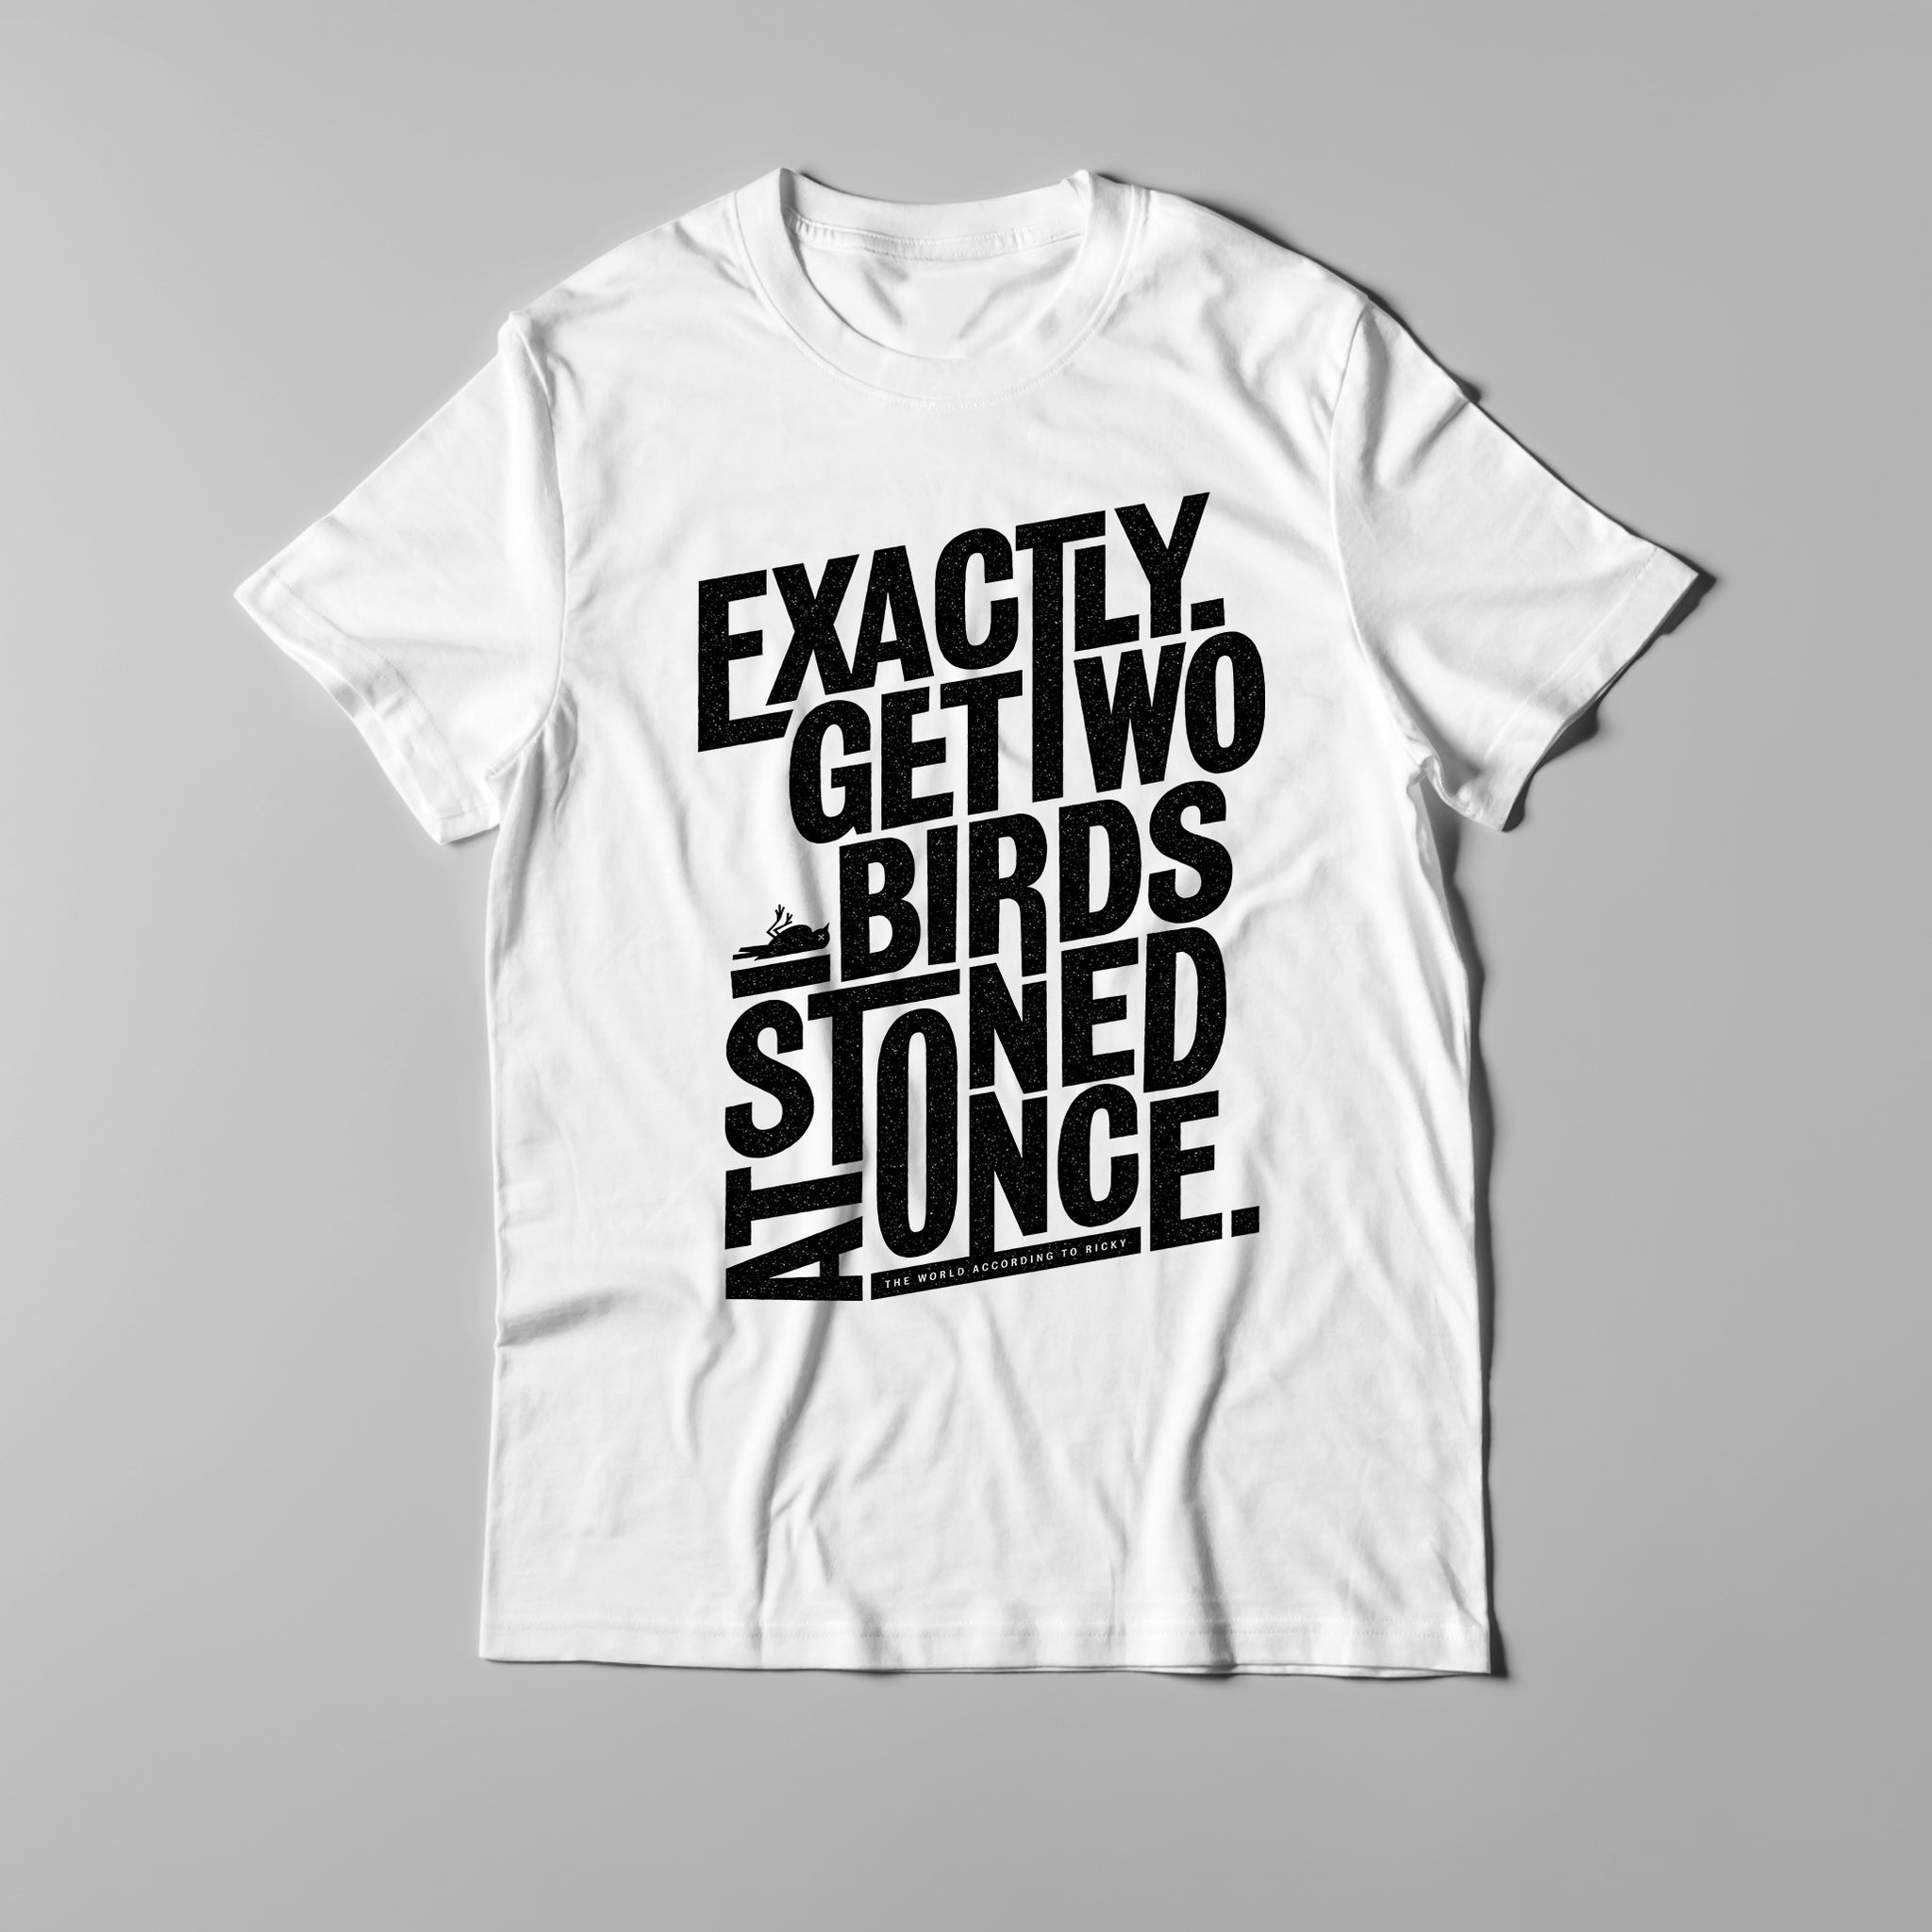 Two Birds T-Shirt - White